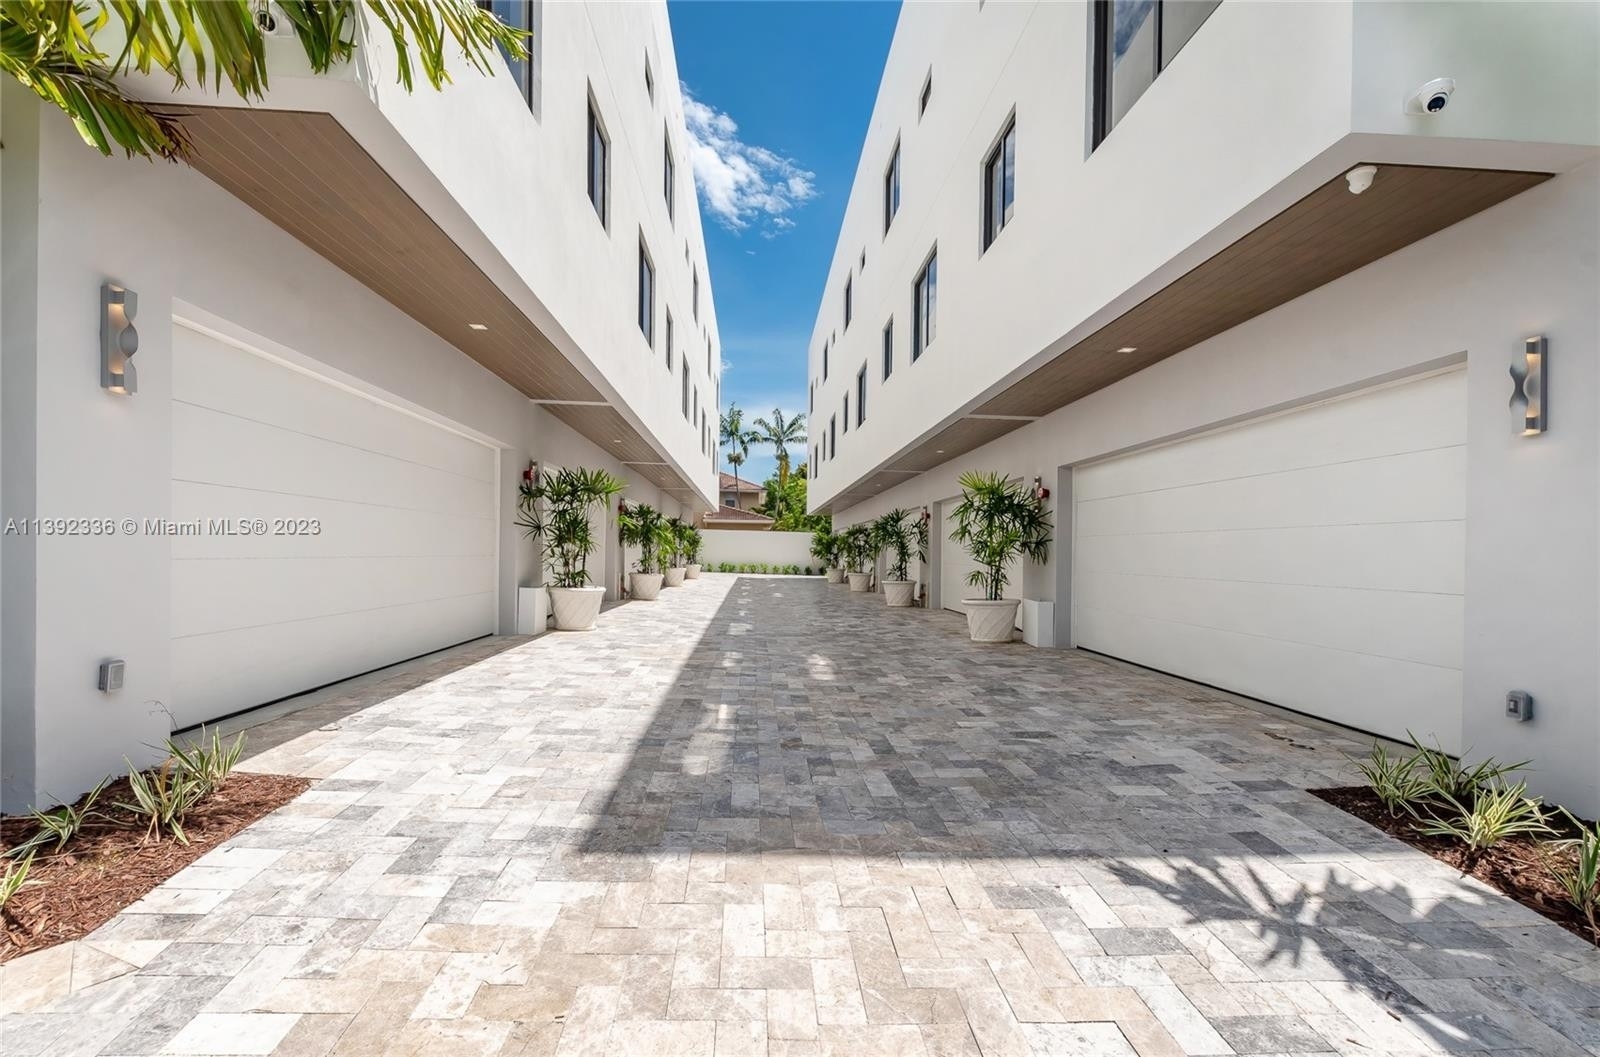 Property at Southwest Coconut Grove, Miami, FL 33133